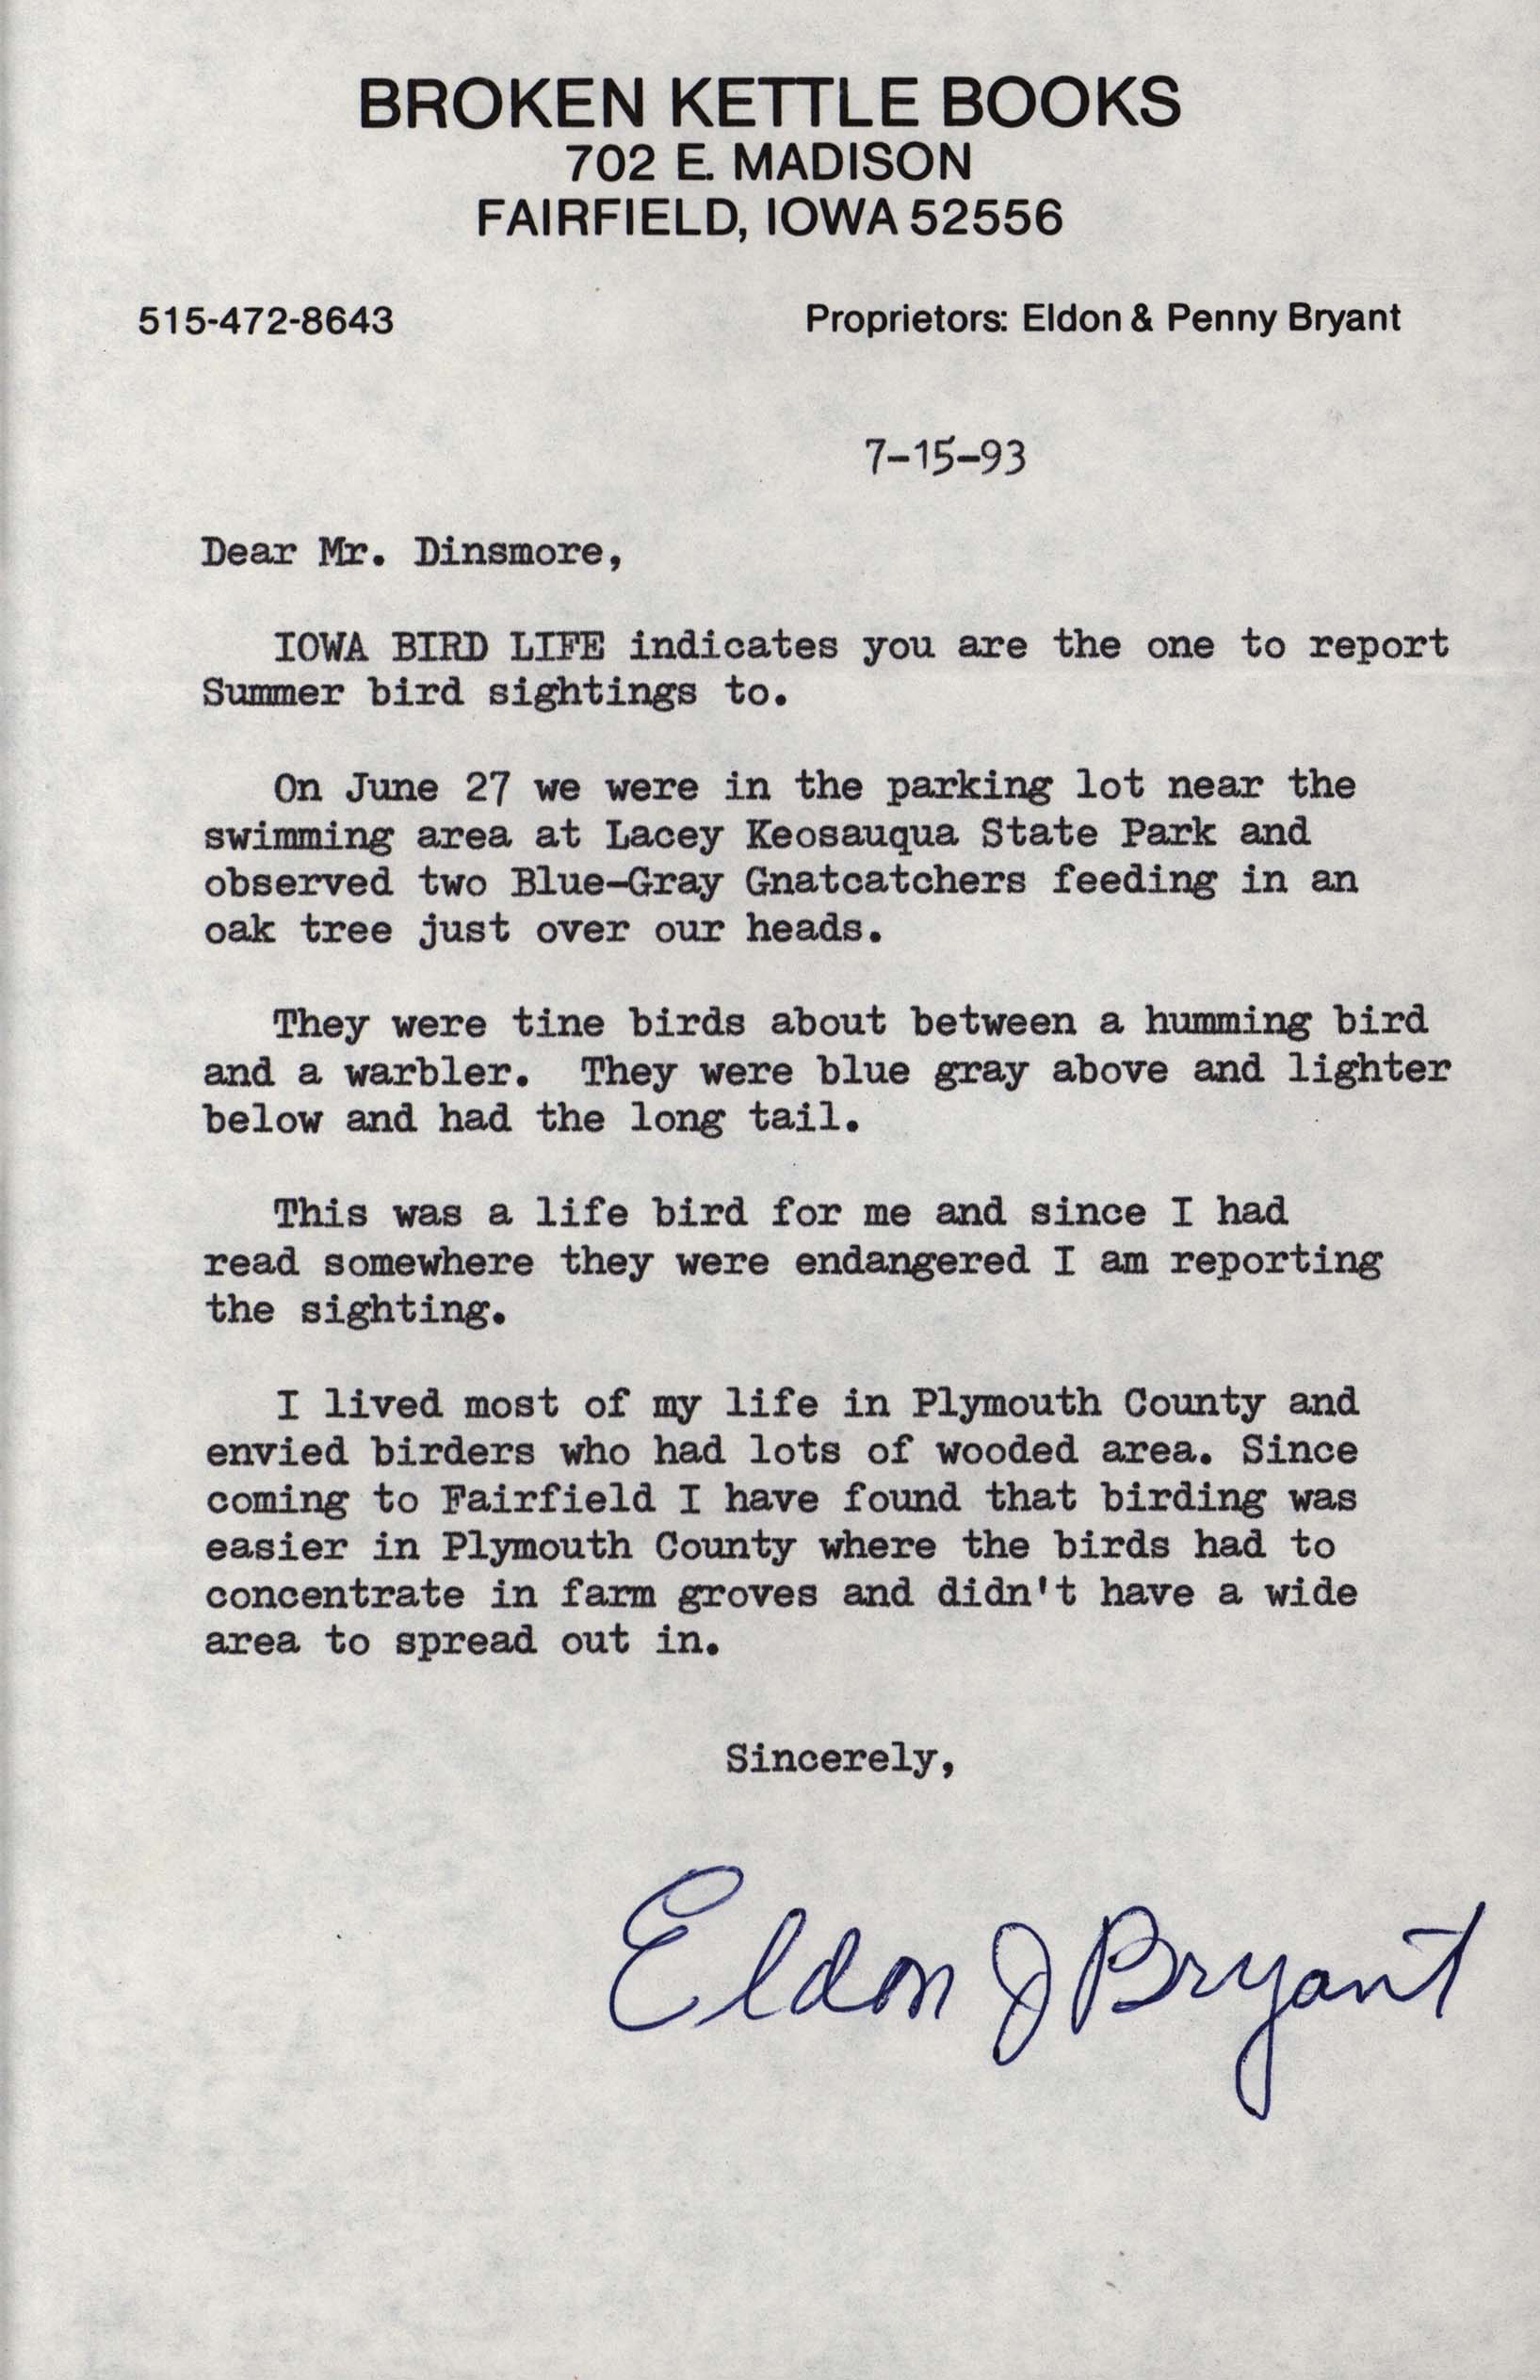 Eldon J. Bryant letter to James J. Dinsmore regarding a Blue-Gray Gnatcatcher sighting, July 15, 1993